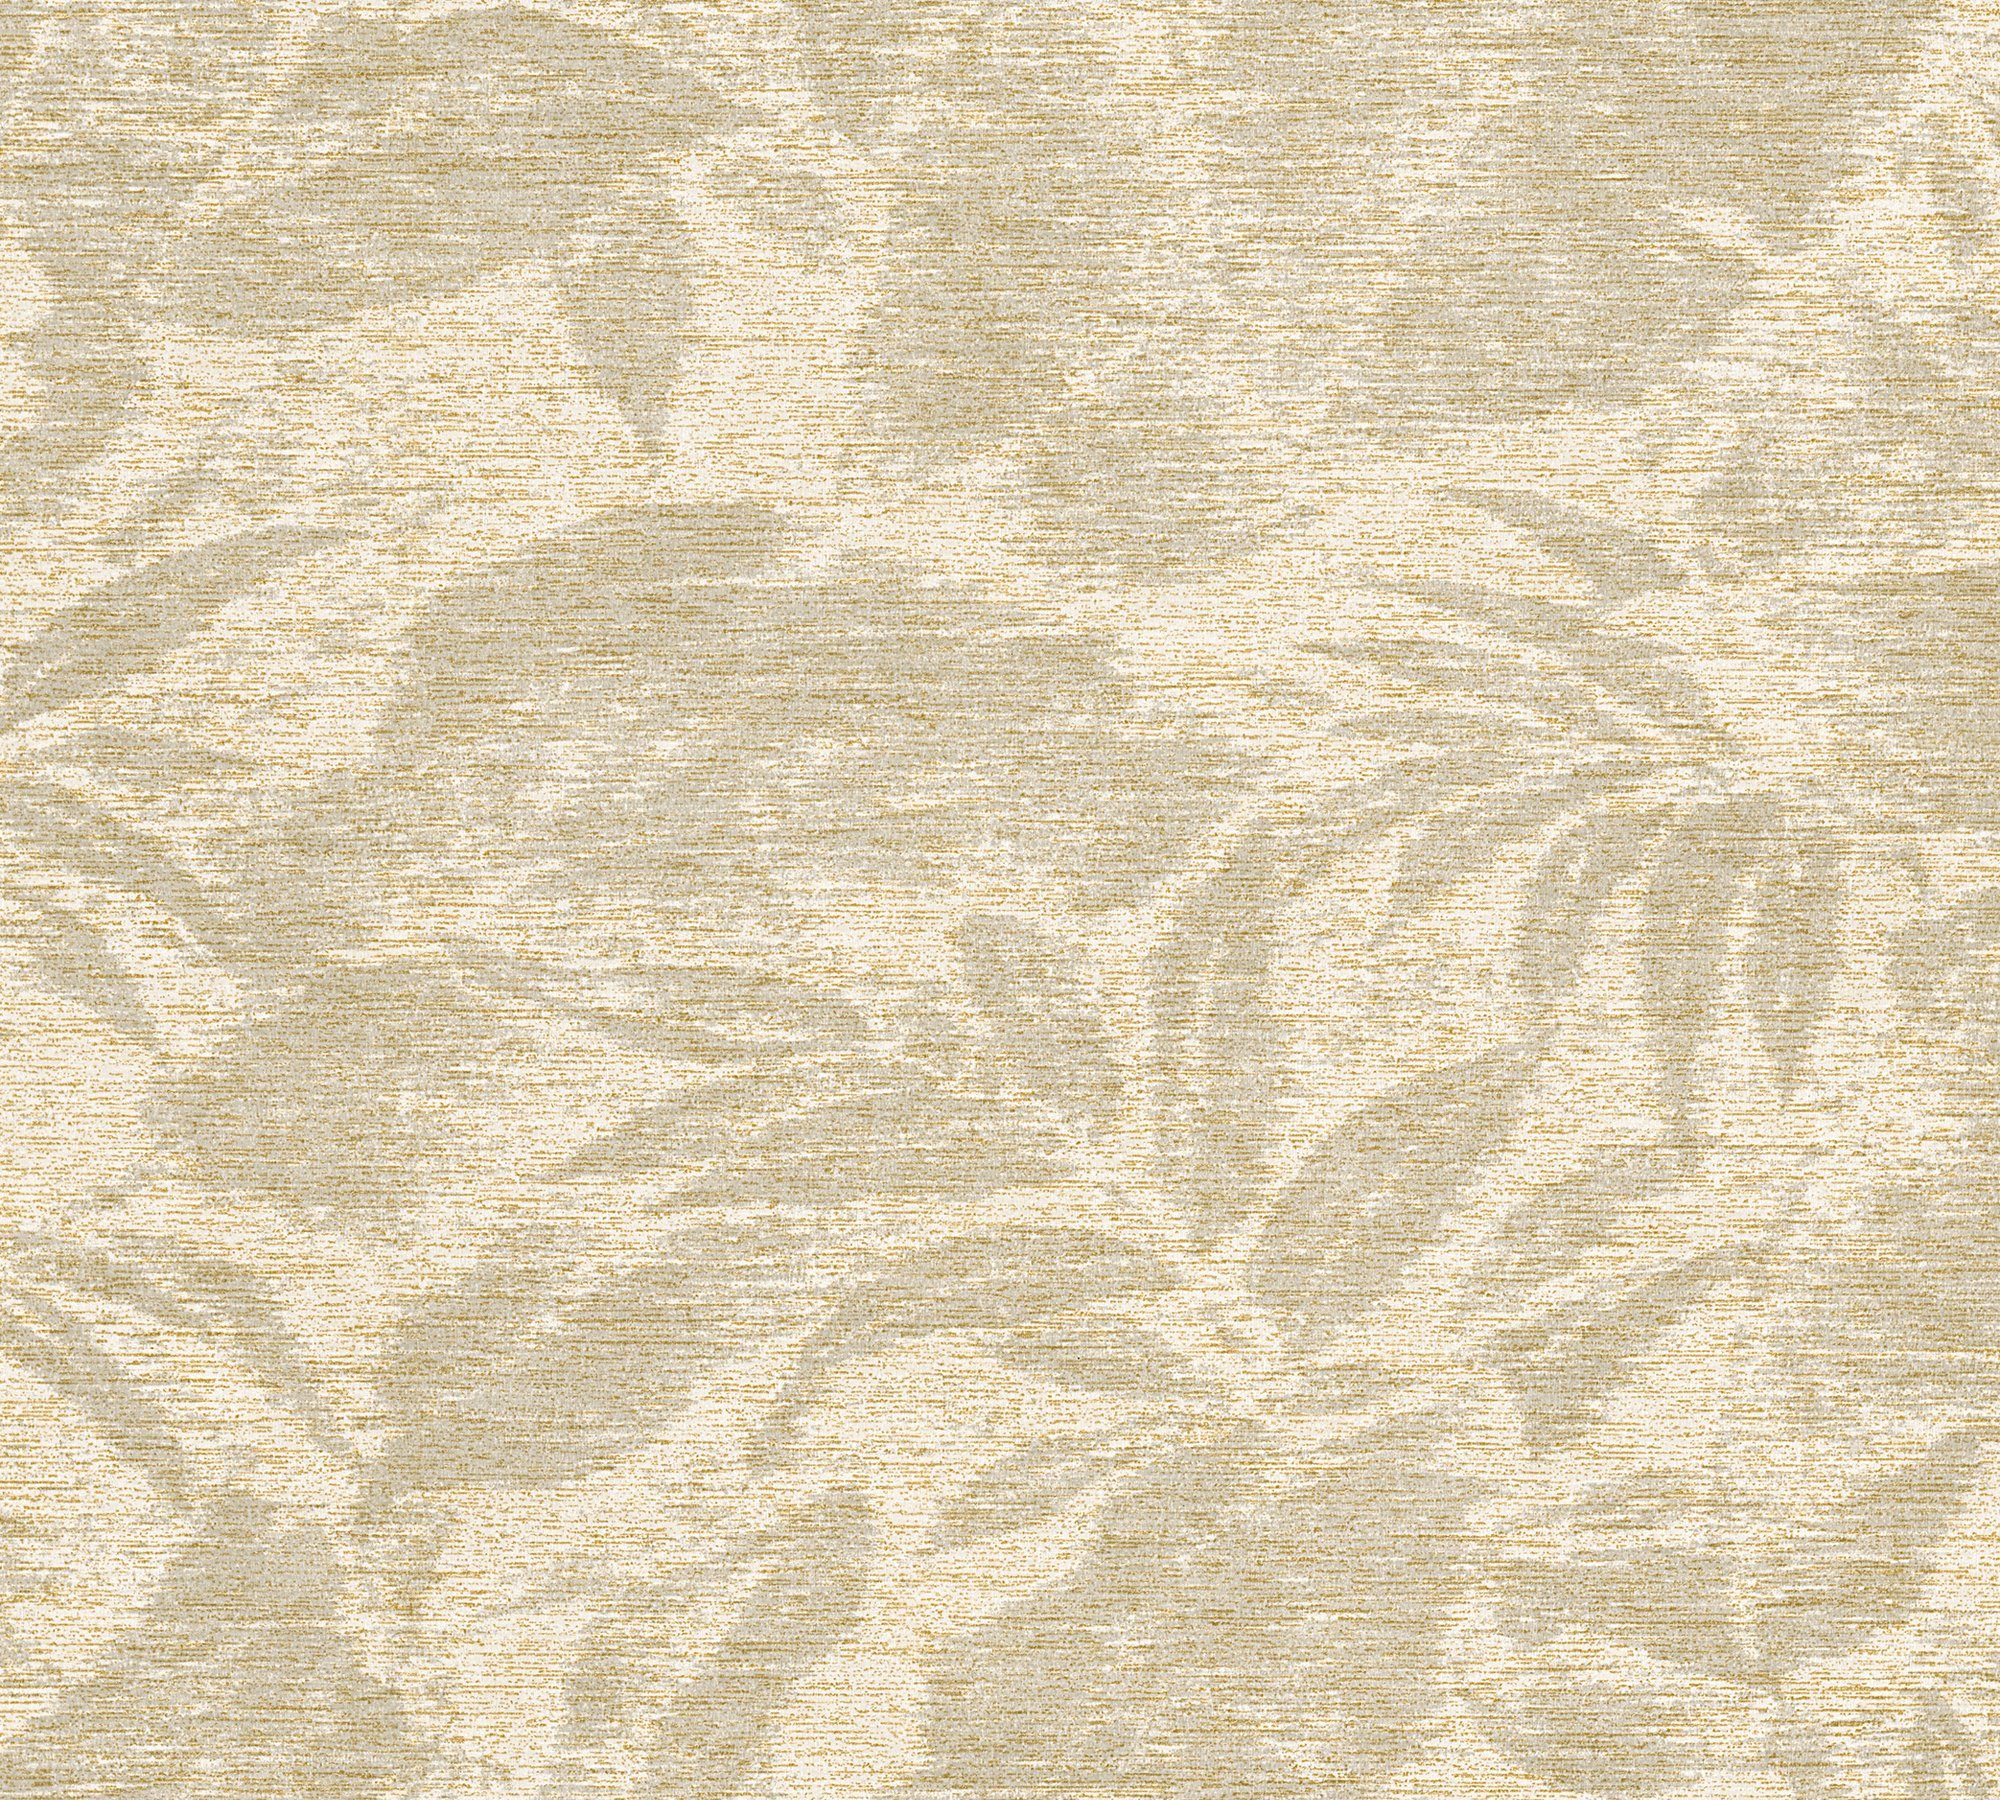 Palmentapete Greenery braun/beige Création Vliestapete Motiv, A.S. Dschungel floral, mit Blätter Tapete